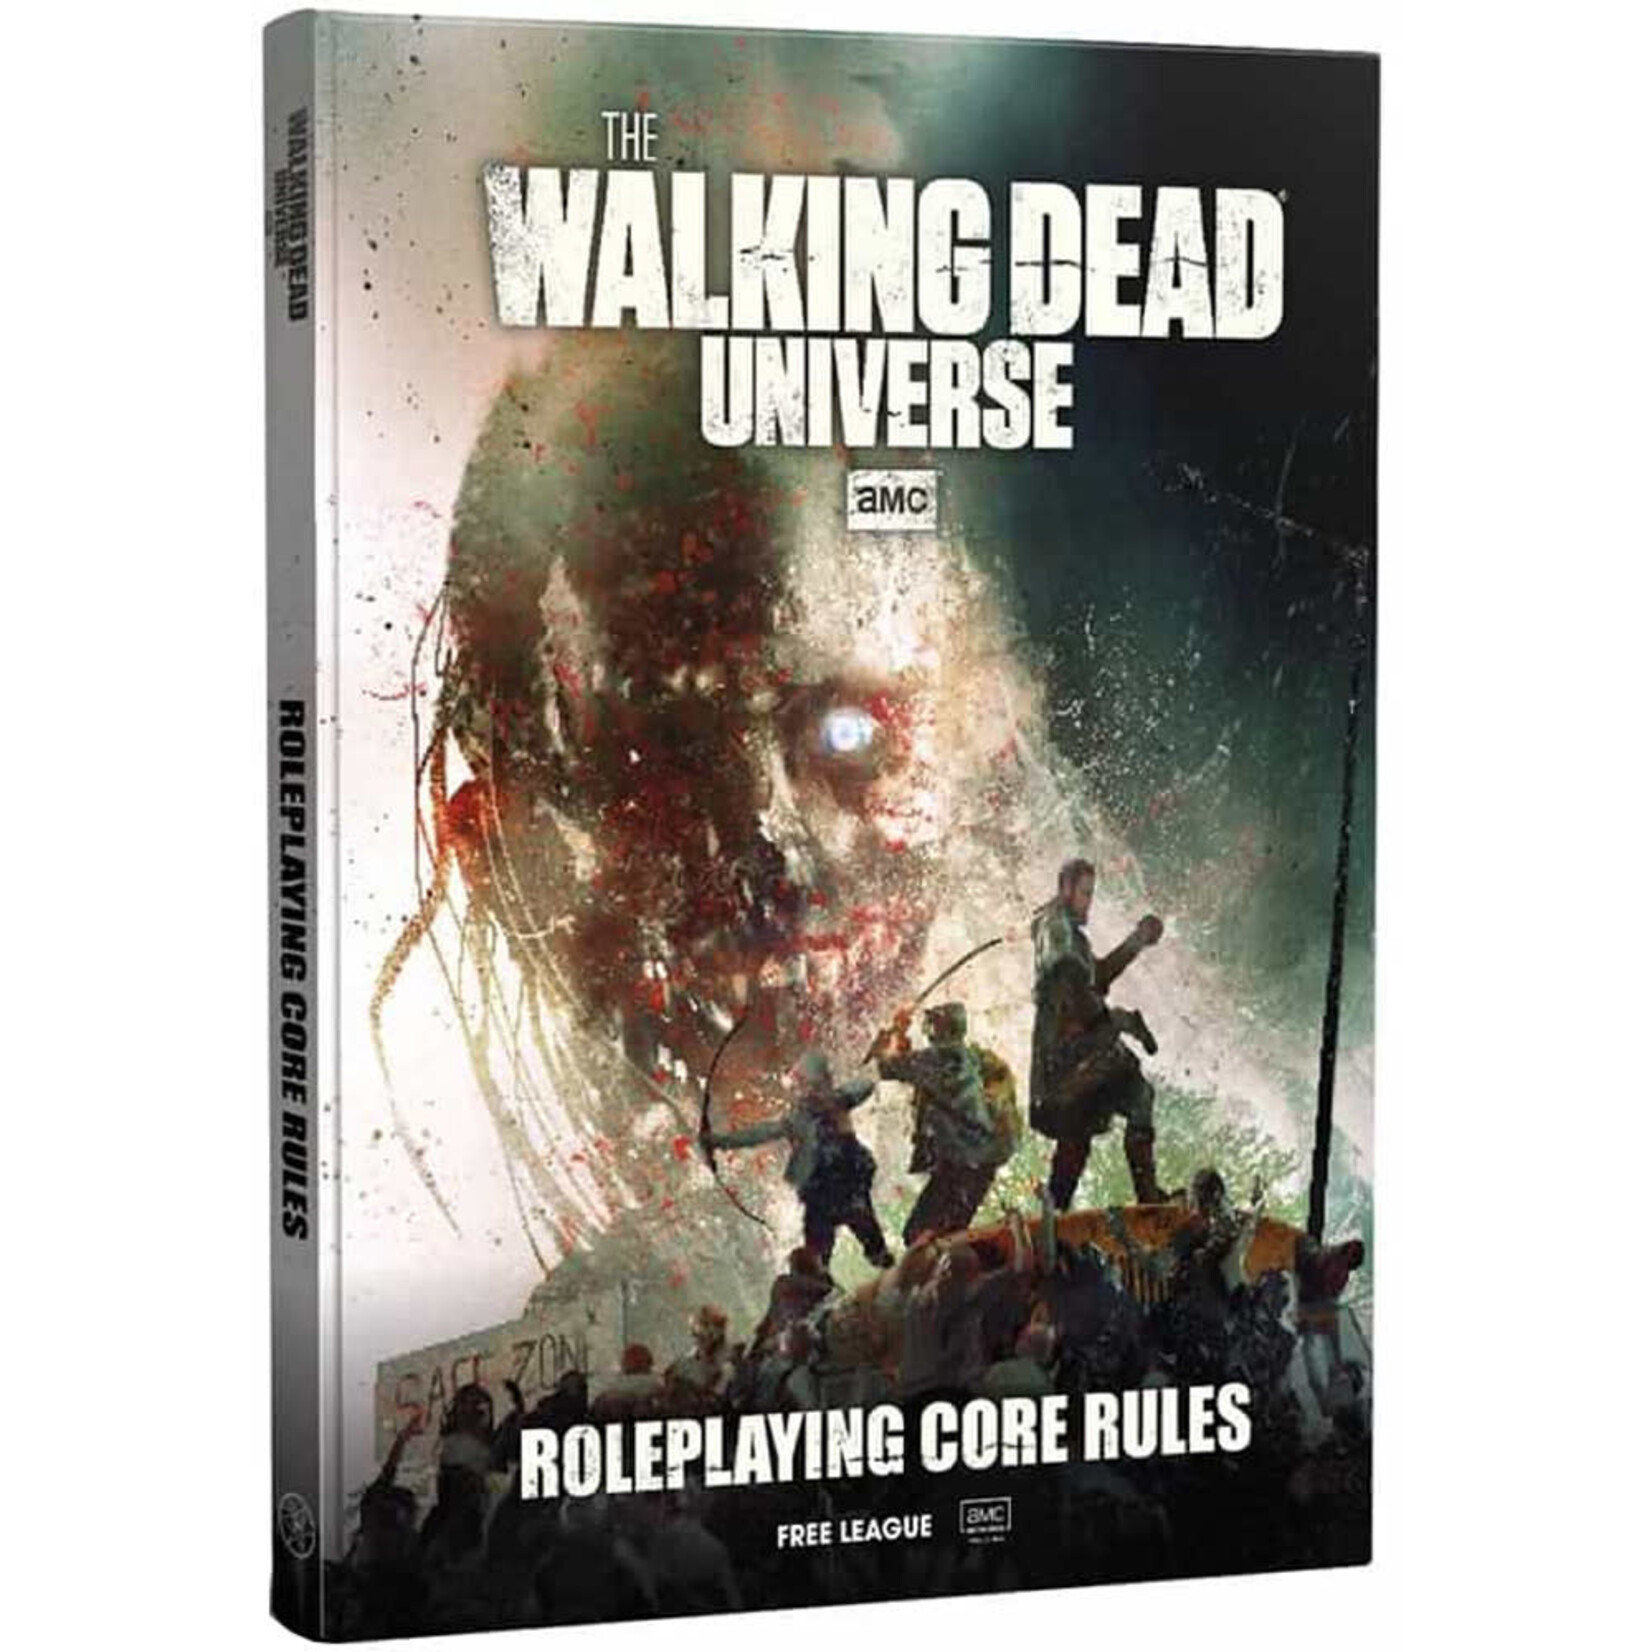 The Walking Dead Universe RPG Core Rulebook